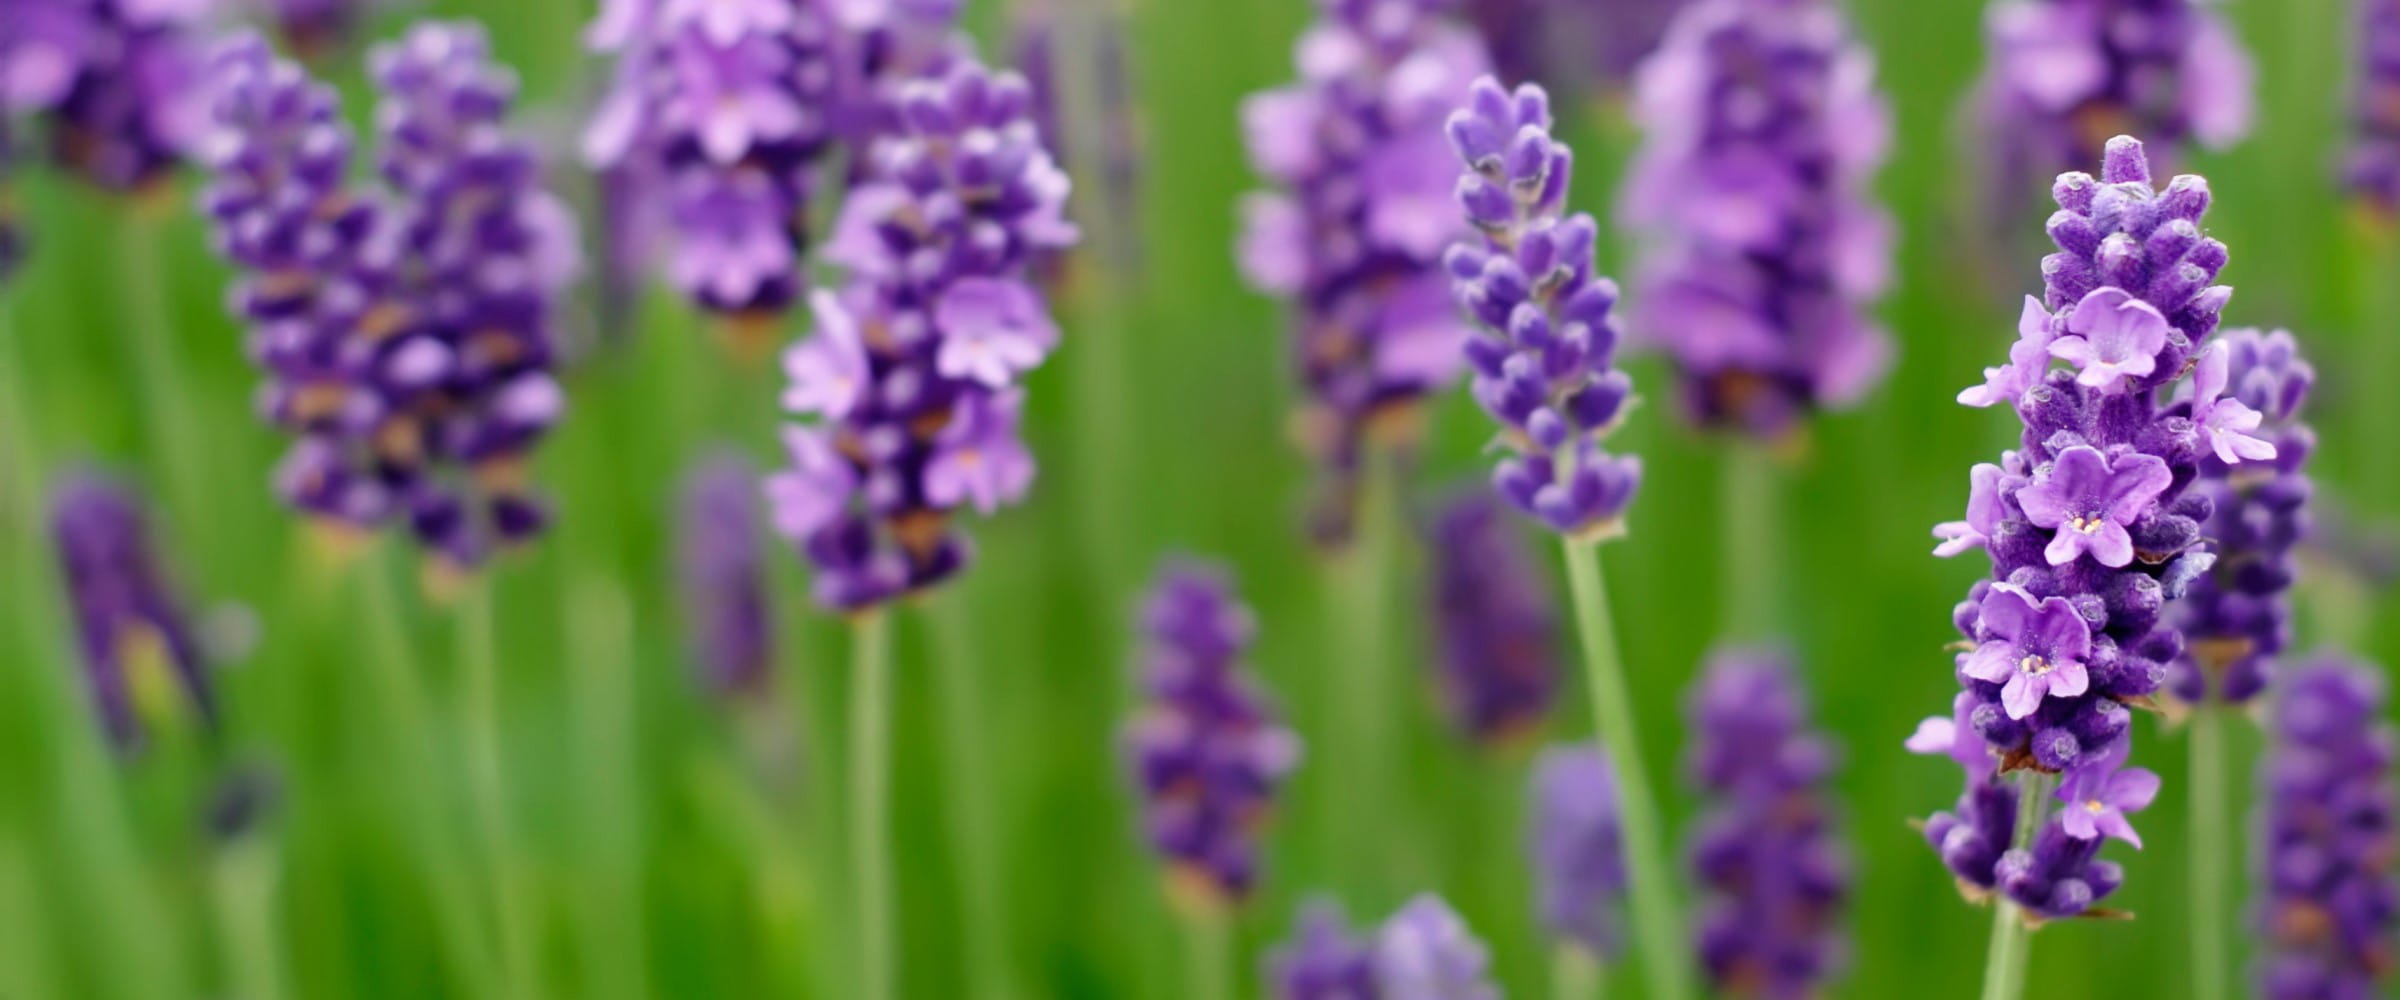 Beautiful purple lavender flowers | Getty/blueenayim